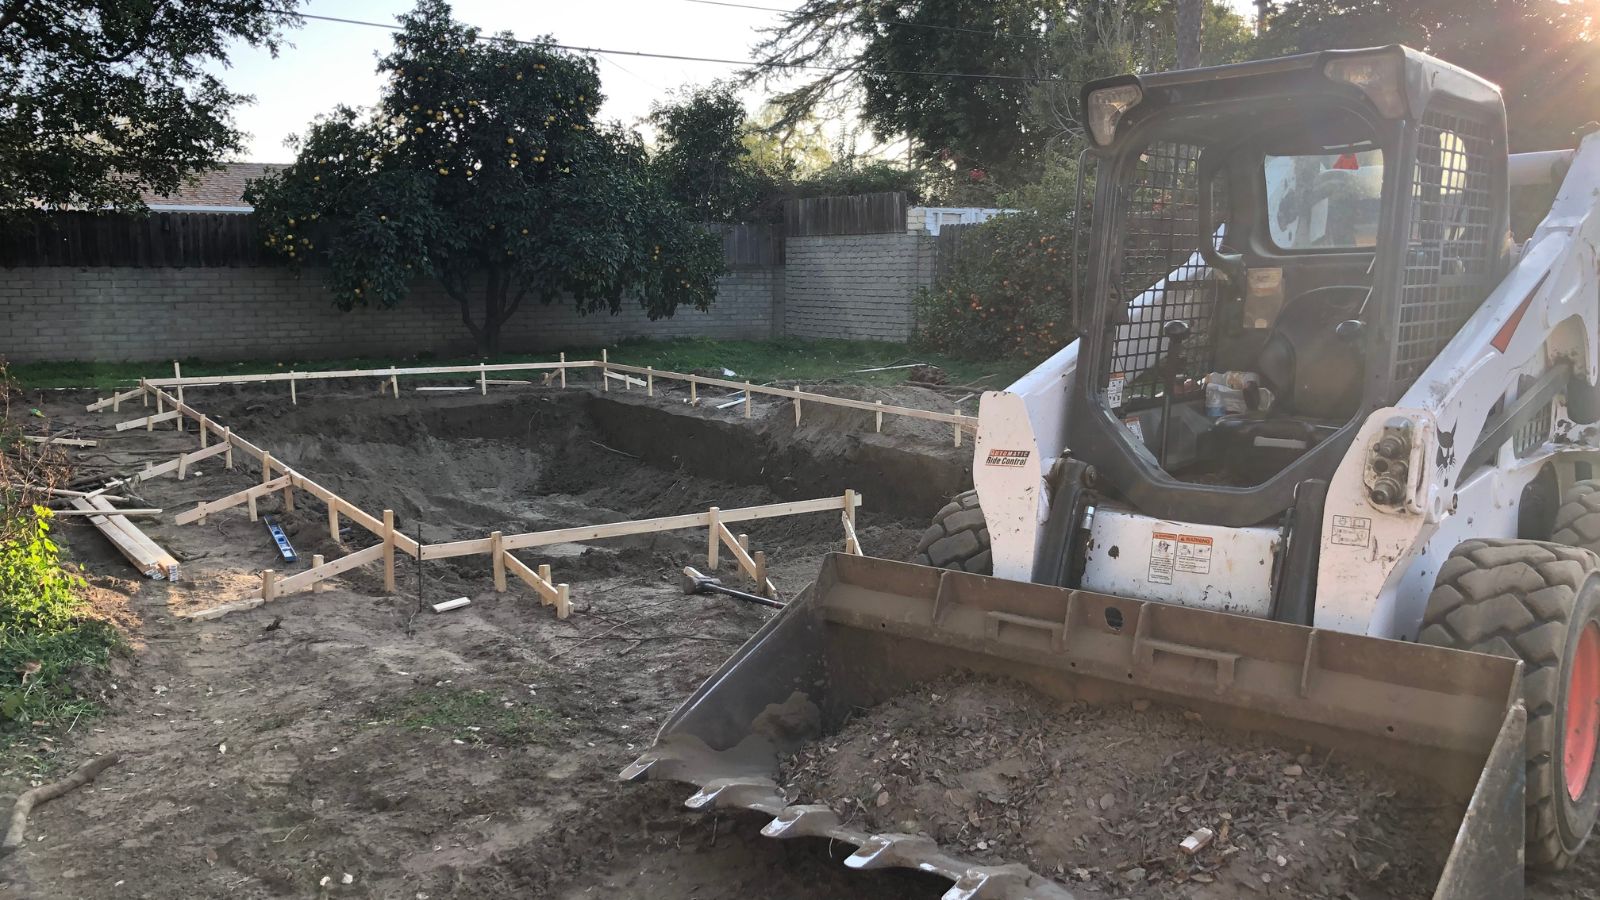 Dig Alert for LA Pool Construction: Marking Utility Lines for Safety